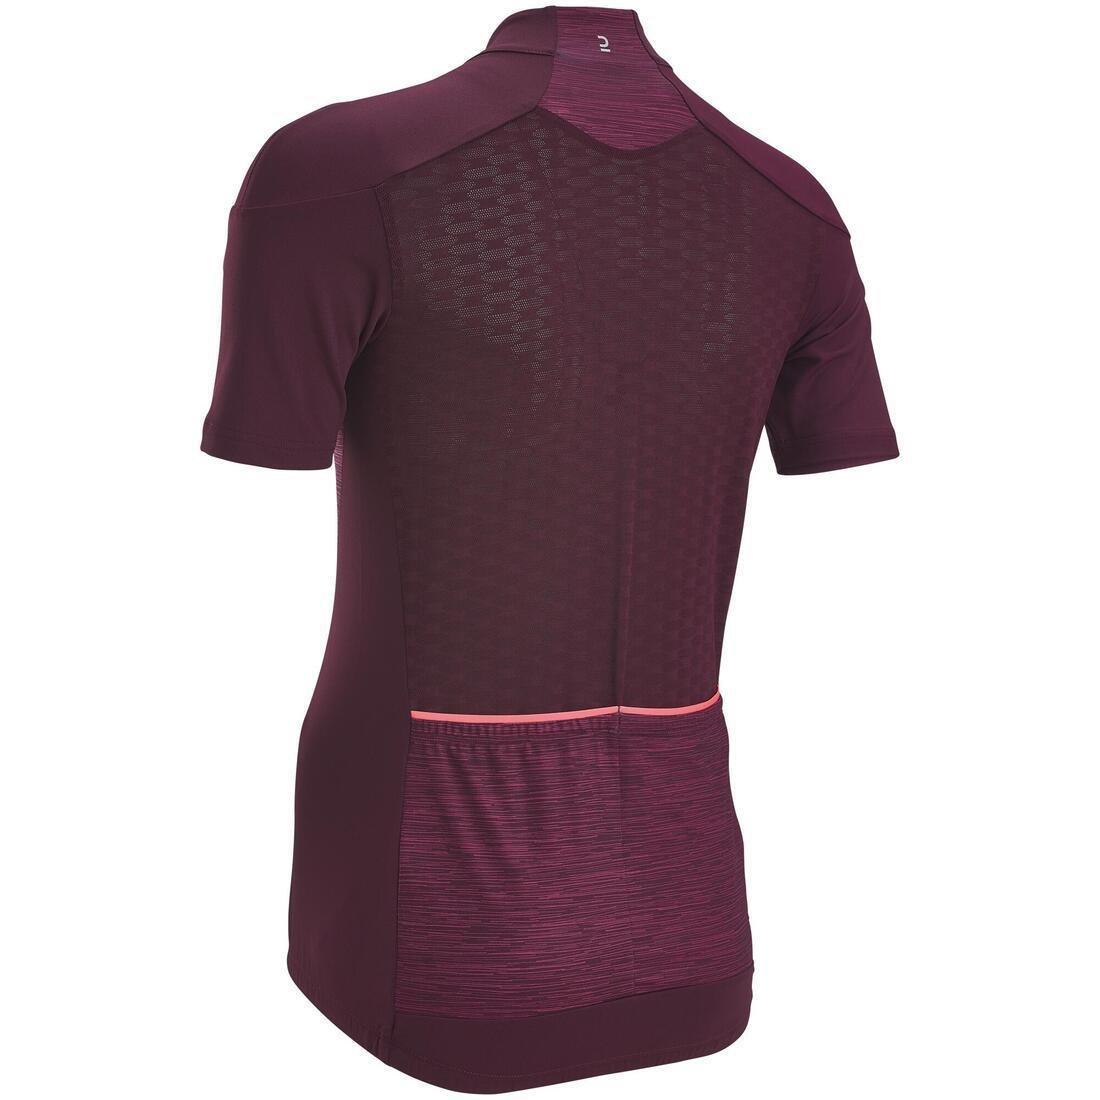 VAN RYSEL - Women's Cycling Short-Sleeved Jersey 500 - Sunplant, BORDEAUX